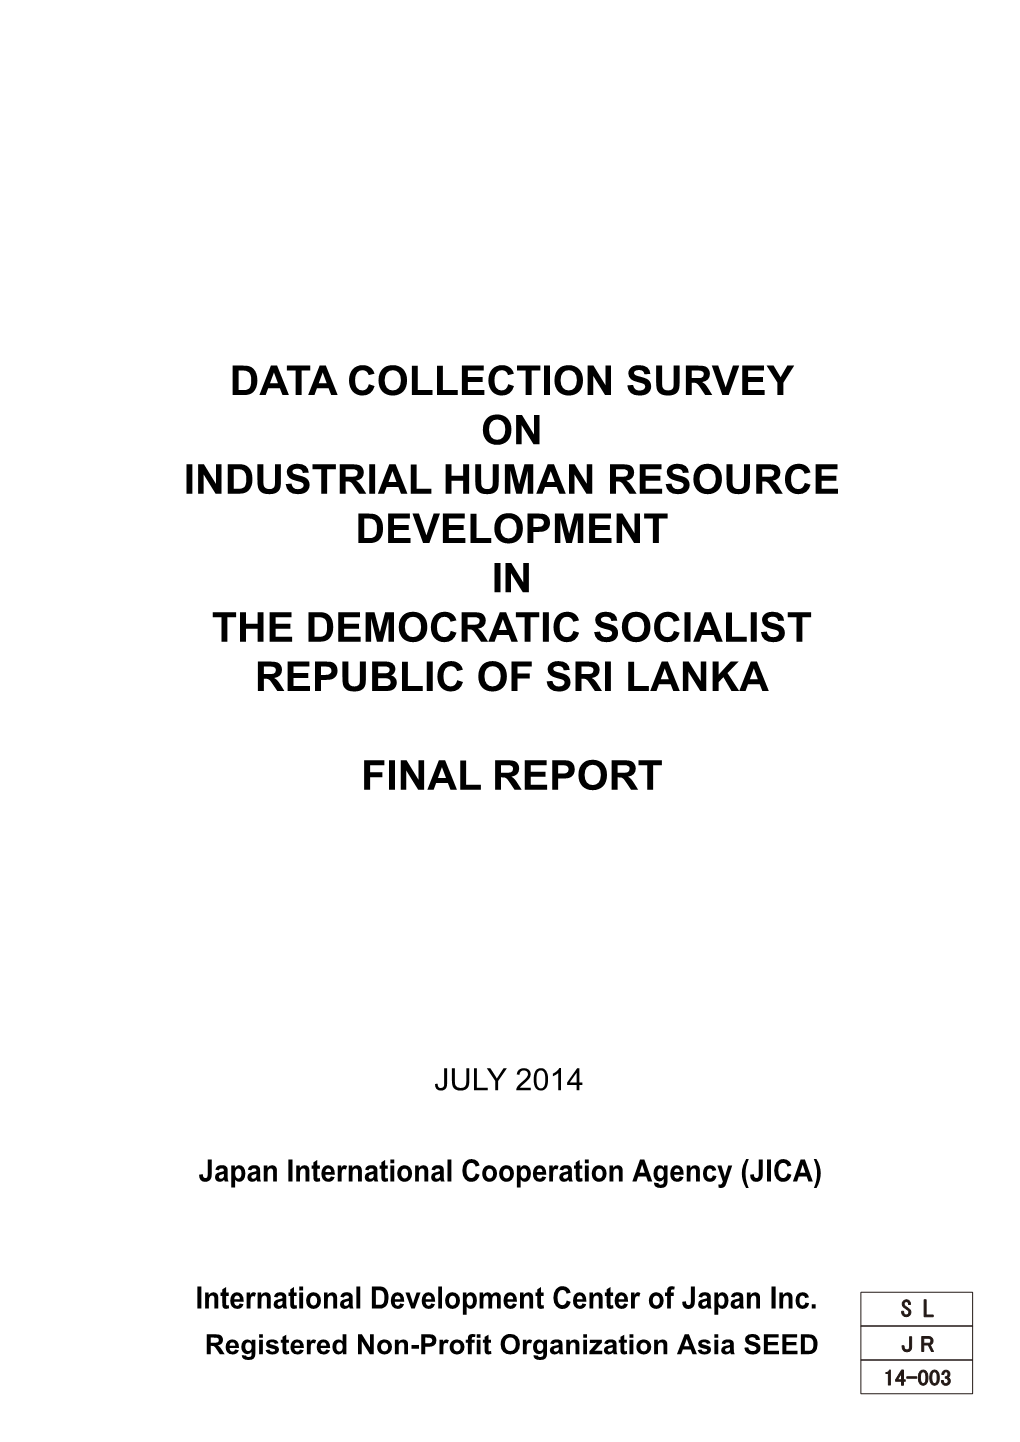 Data Collection Survey on Industrial Human Resource Development in the Democratic Socialist Republic of Sri Lanka